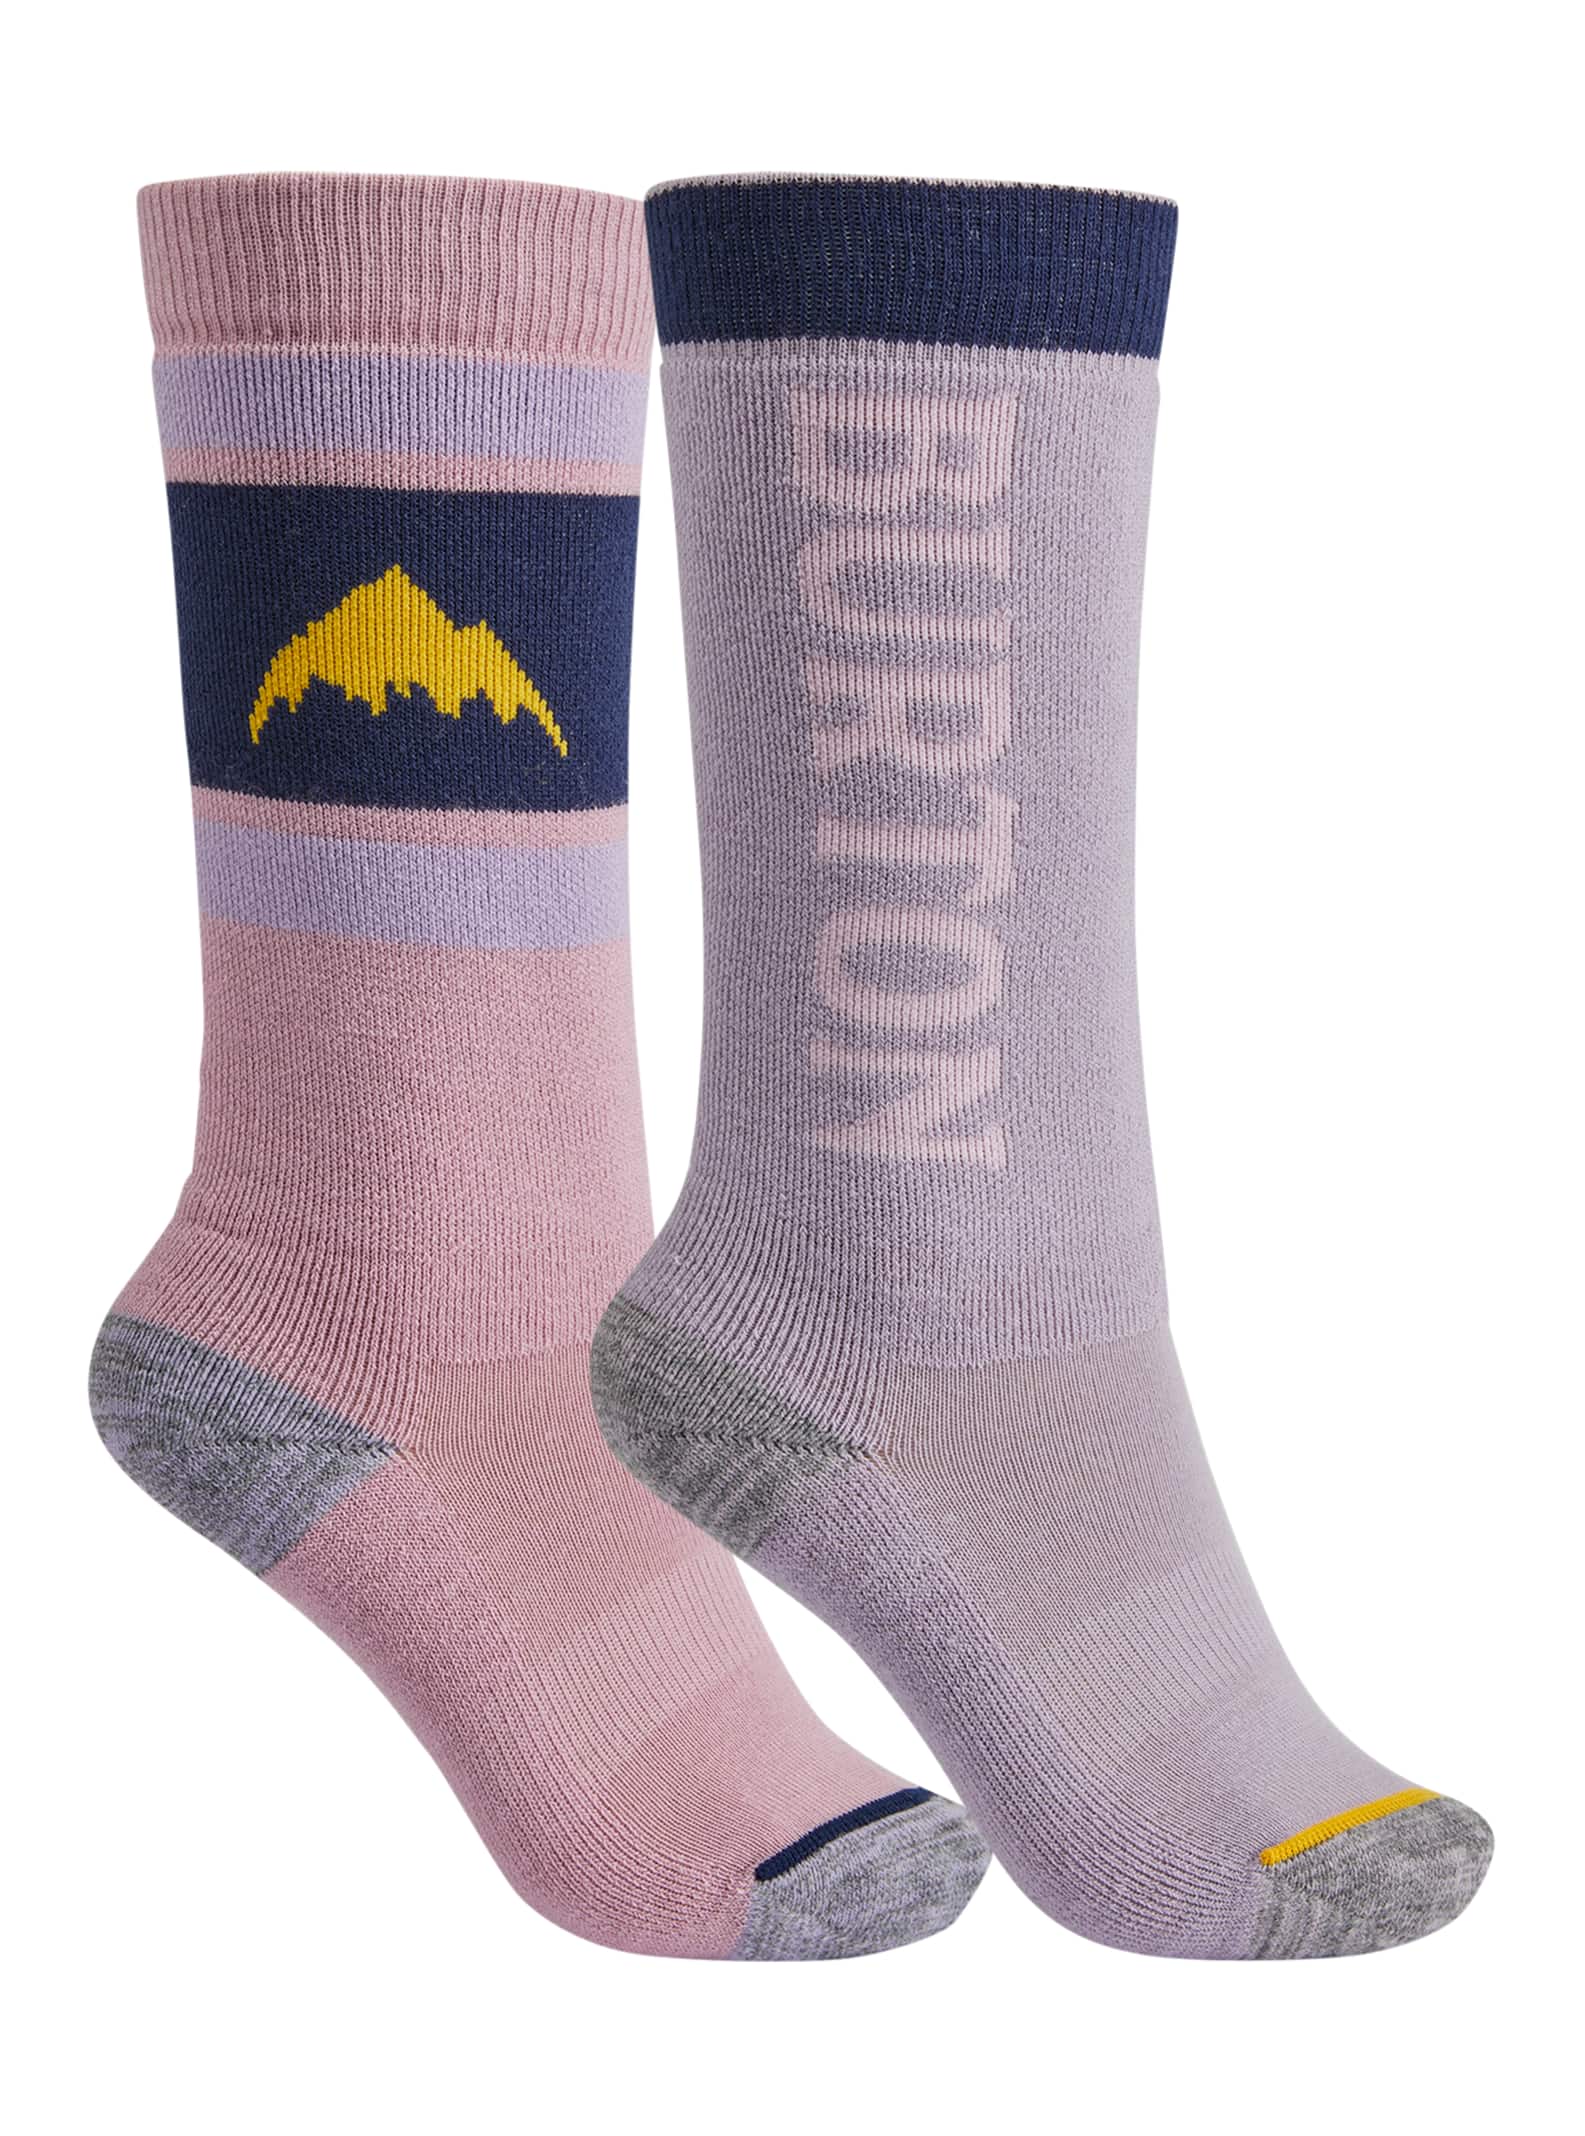 Kids' Socks | Burton Snowboards US